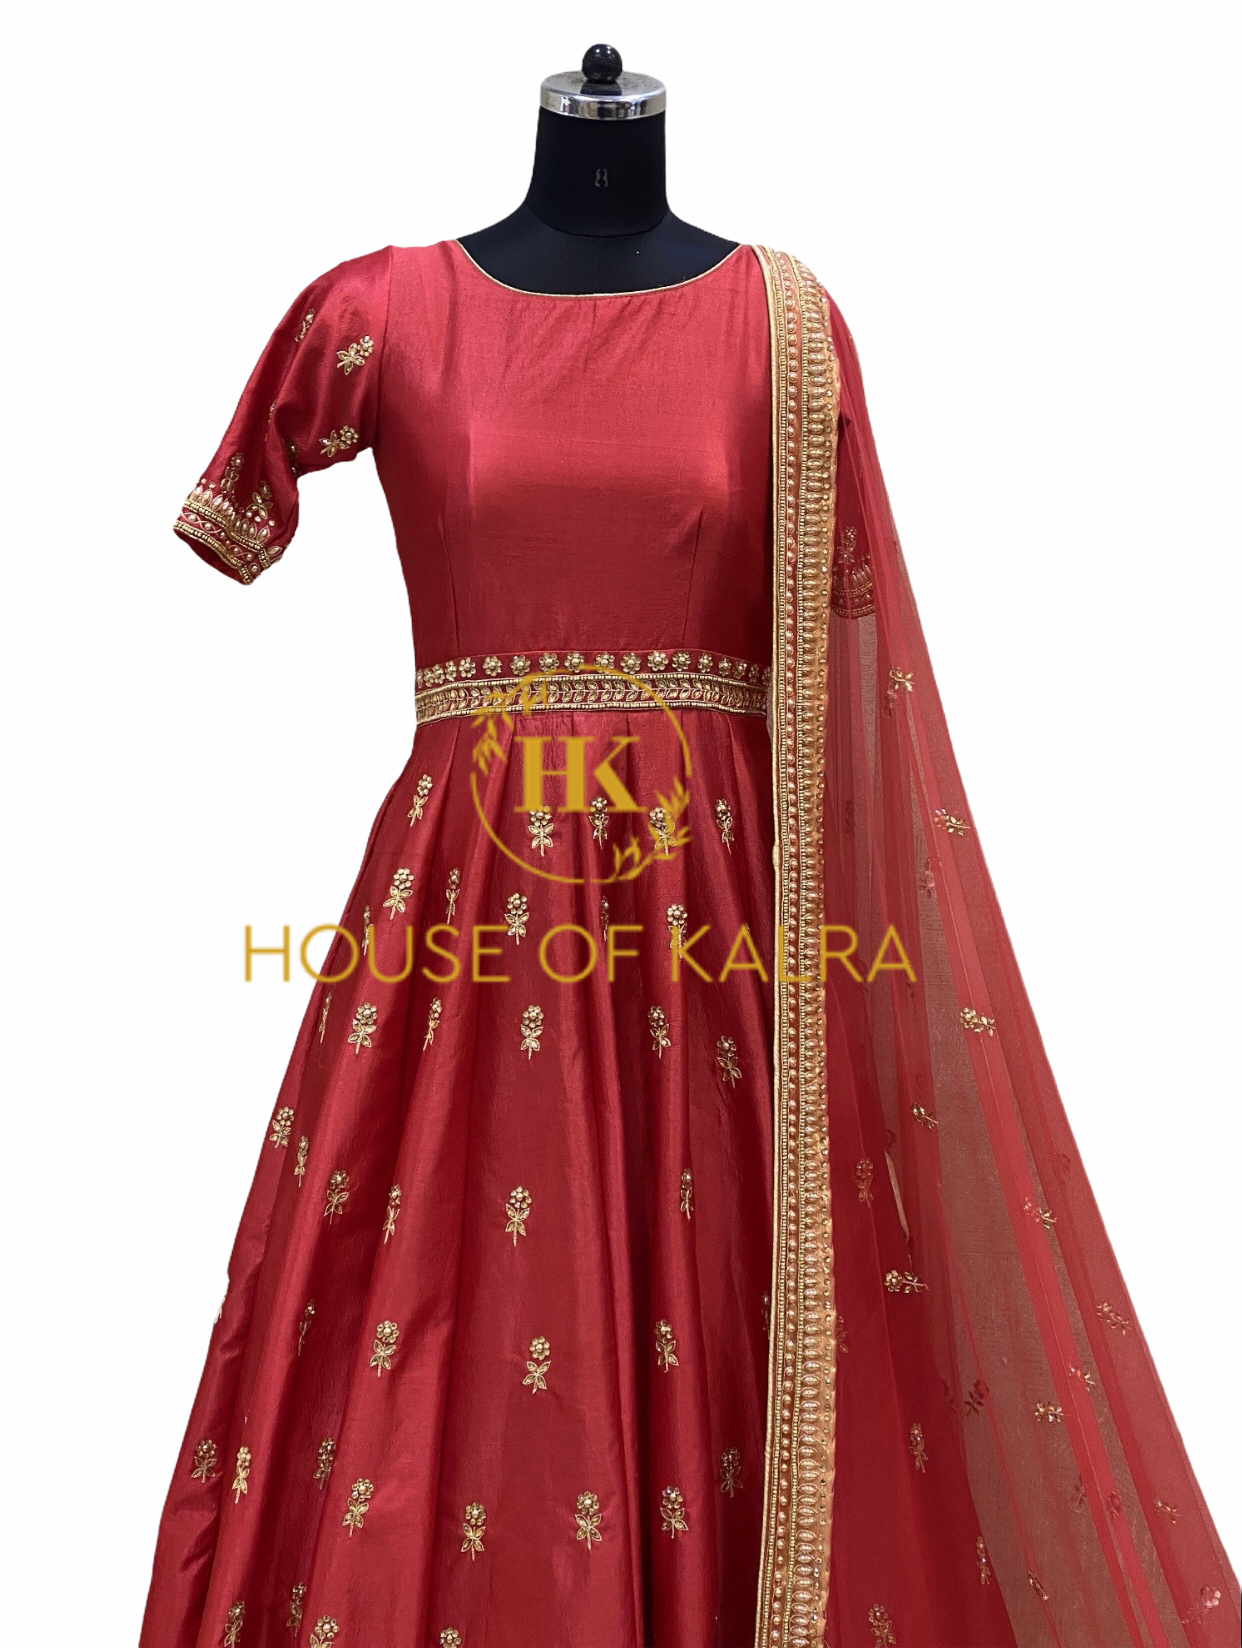 Get Raina Traditional Anarkali Dress Online at Affordable Price.